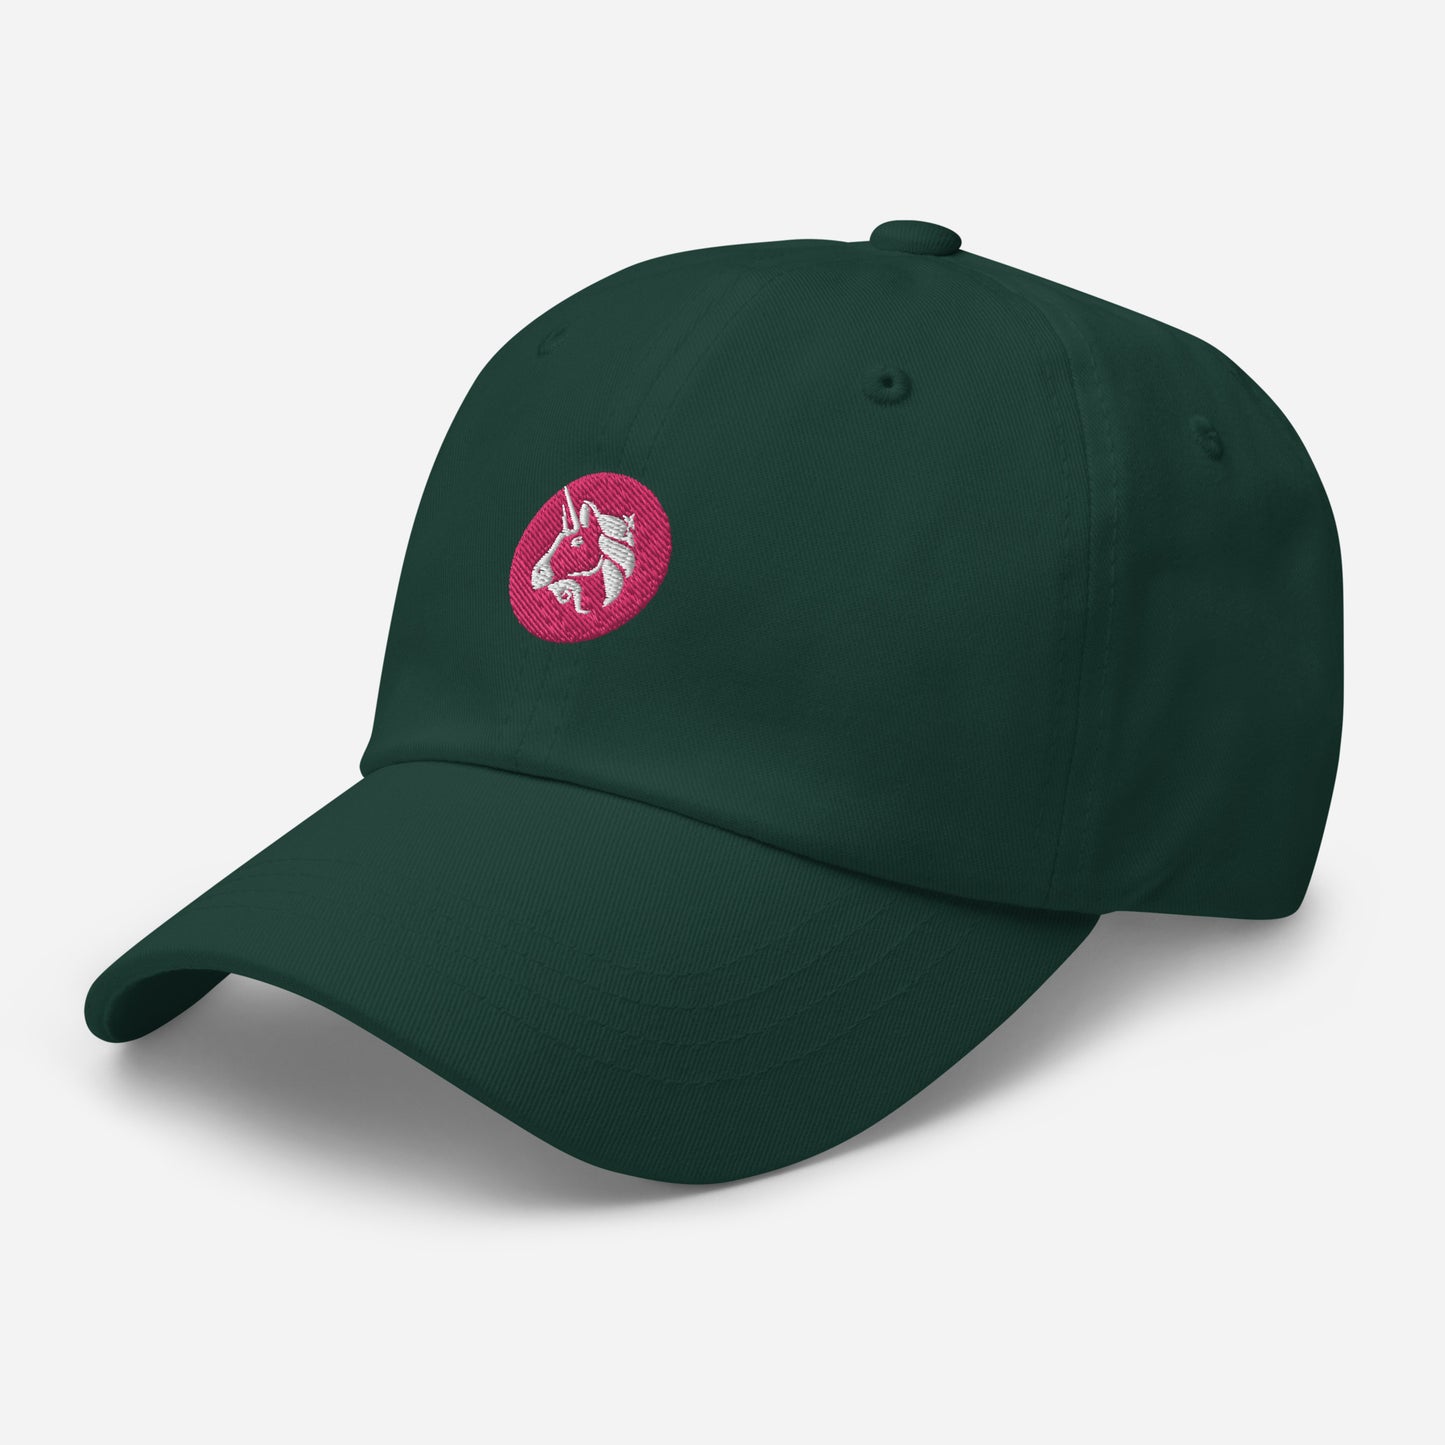 UNISWAP (UNI) - Fitted baseball cap